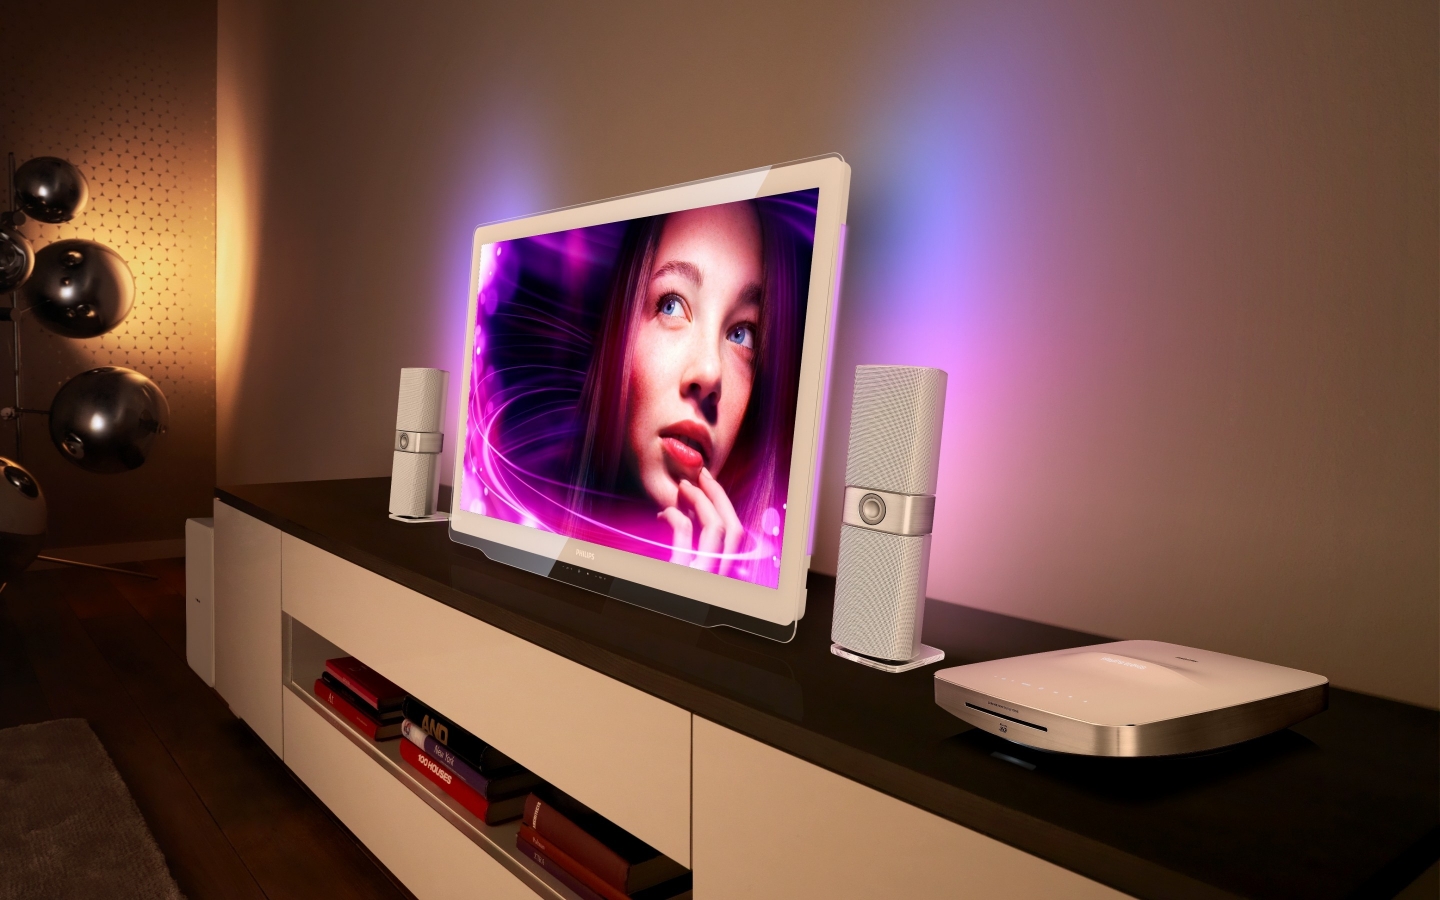 Philips DesignLine TV for 1440 x 900 widescreen resolution